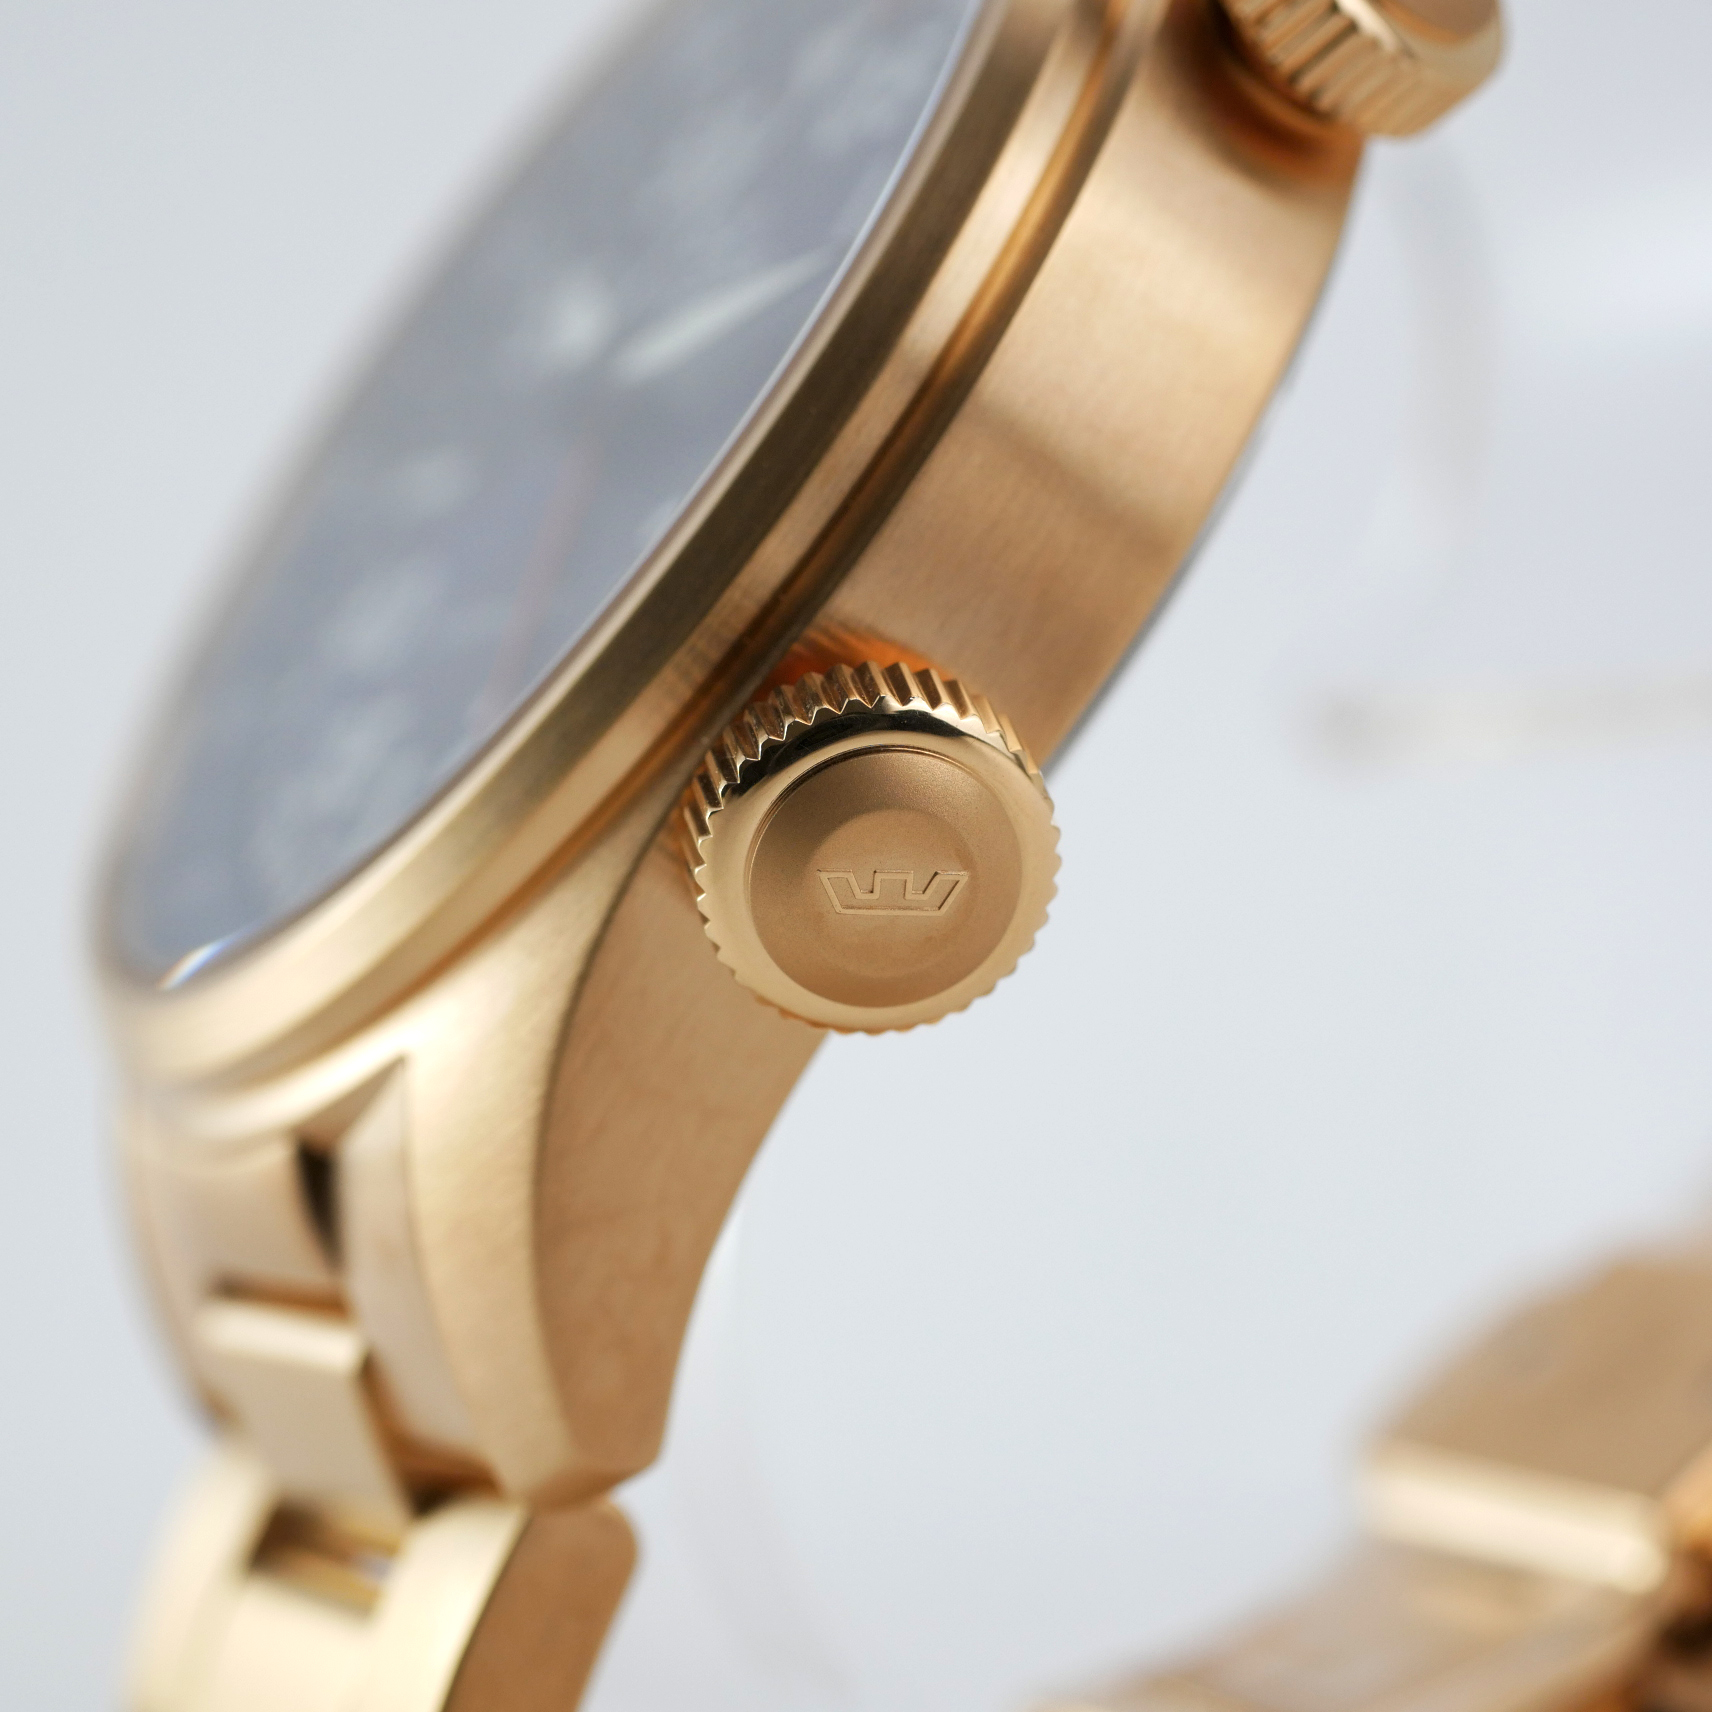 Glycine Airpilot Dual Time Chronograph Swiss Men's Watch Blue Dial GL0368